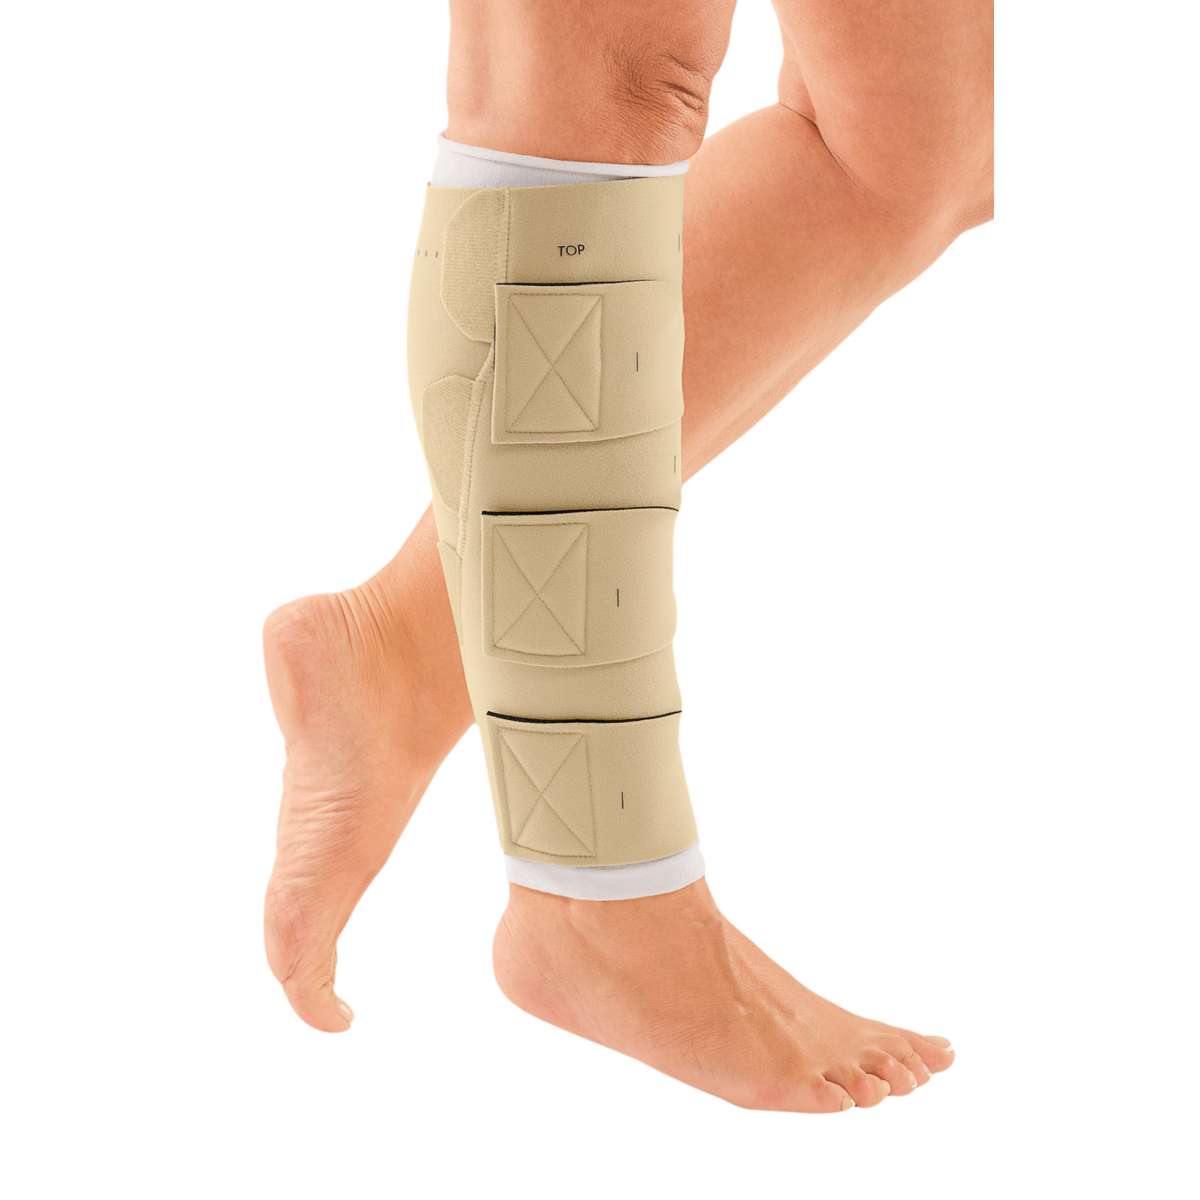 circaid Reduction Kit Lymphedema Compression Lower Leg Wrap